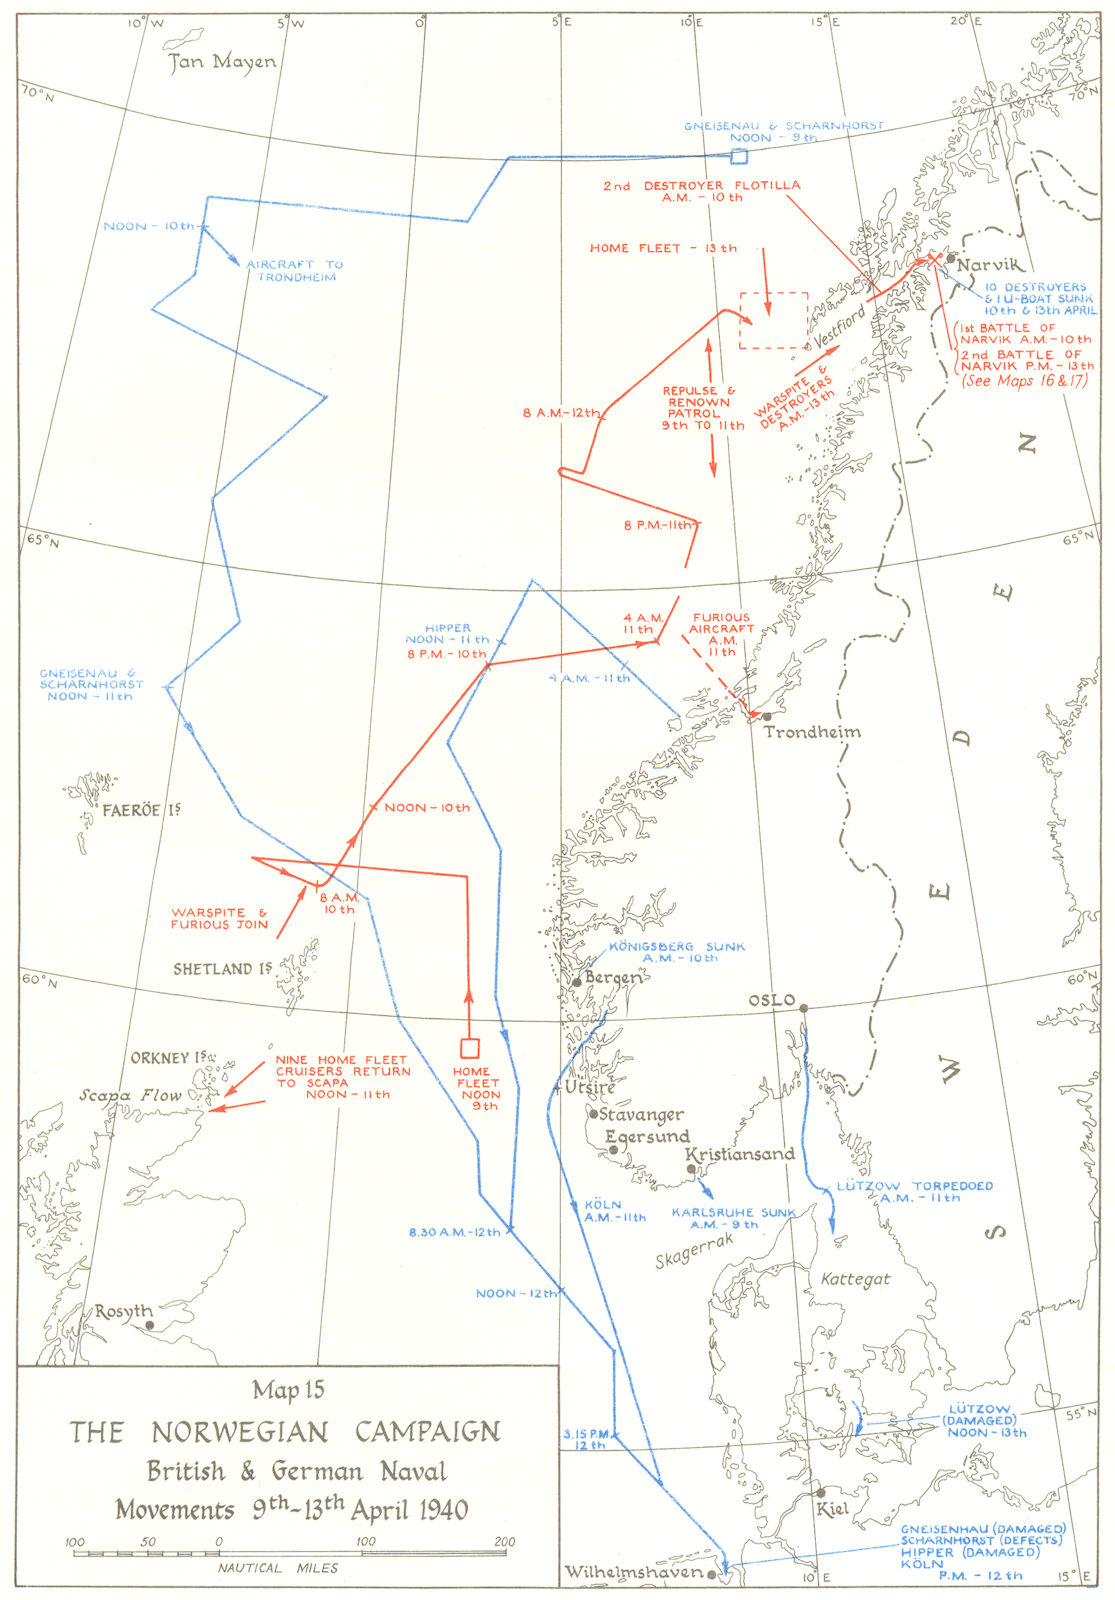 NORWEGIAN CAMPAIGN. British & German Naval movements, 9-13th Apr, 1940 1954 map